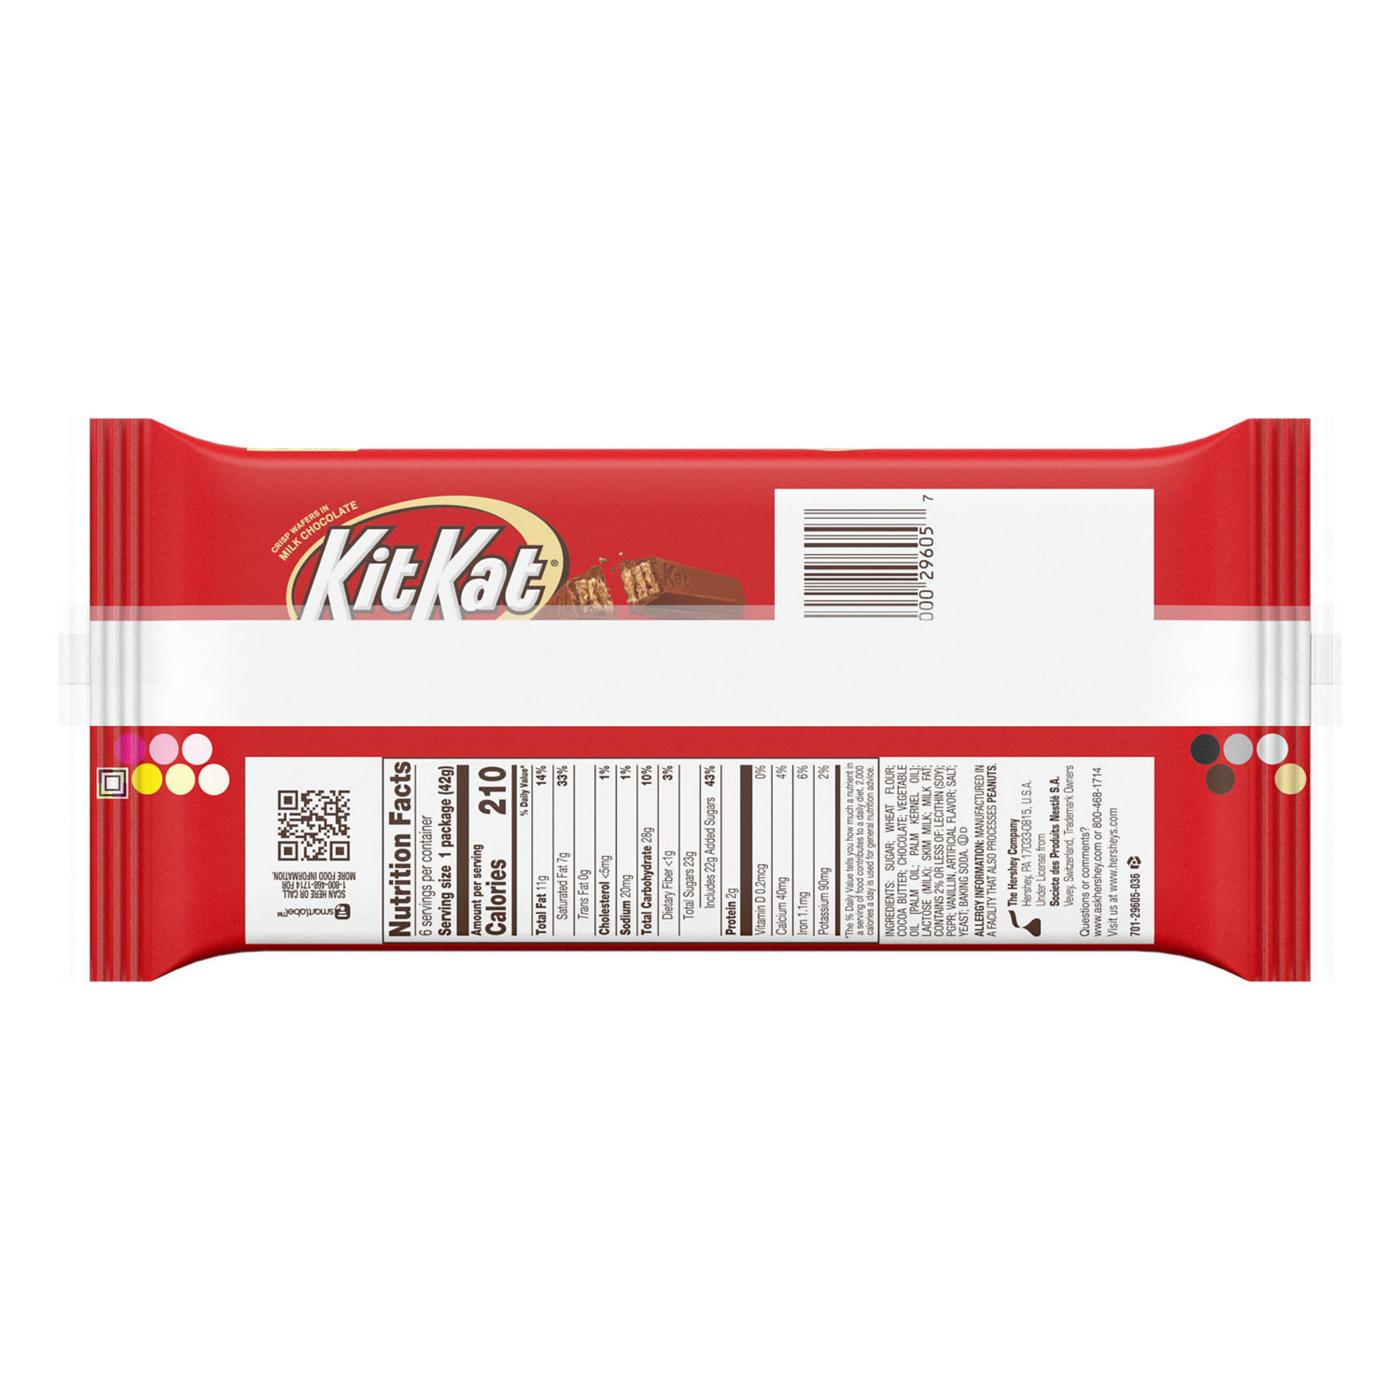 Kit Kat Milk Chocolate Full Size Candy Bars; image 5 of 5